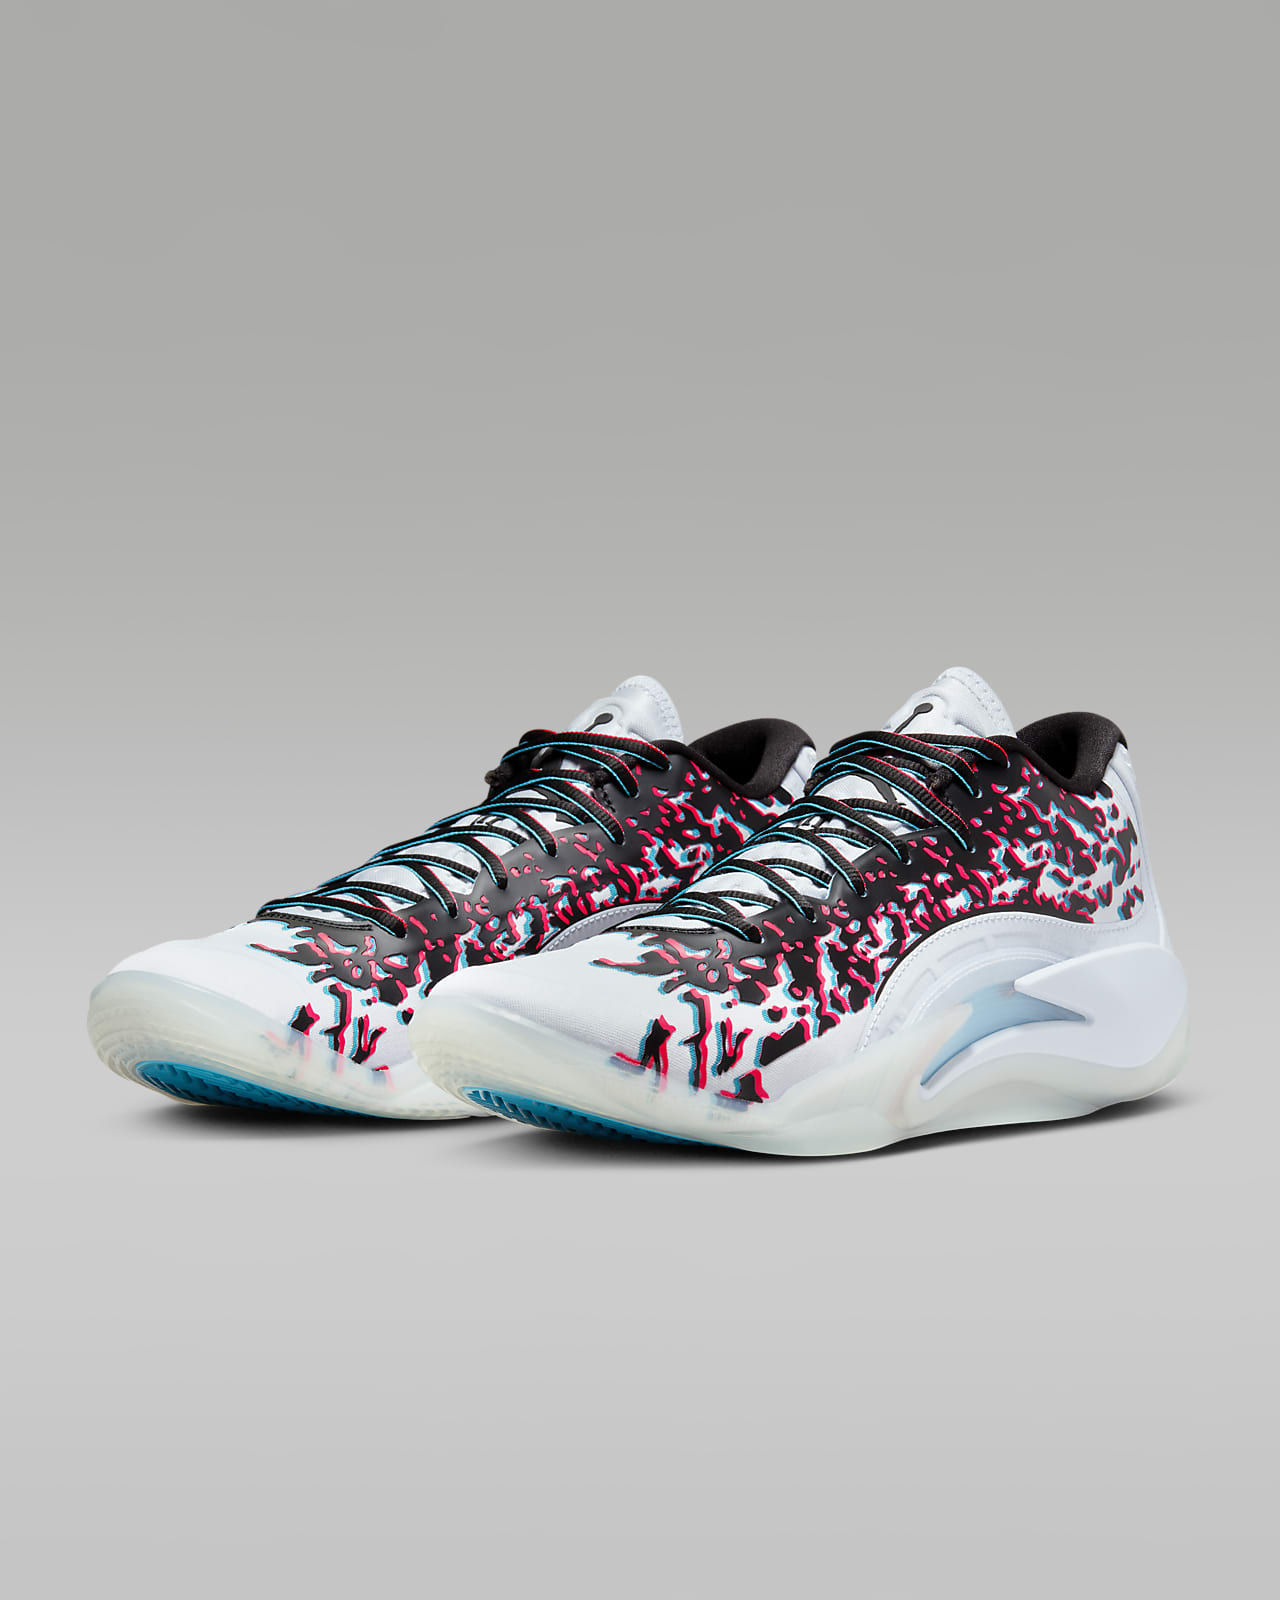 Zion 3 'Z-3D' PF Basketball Shoes